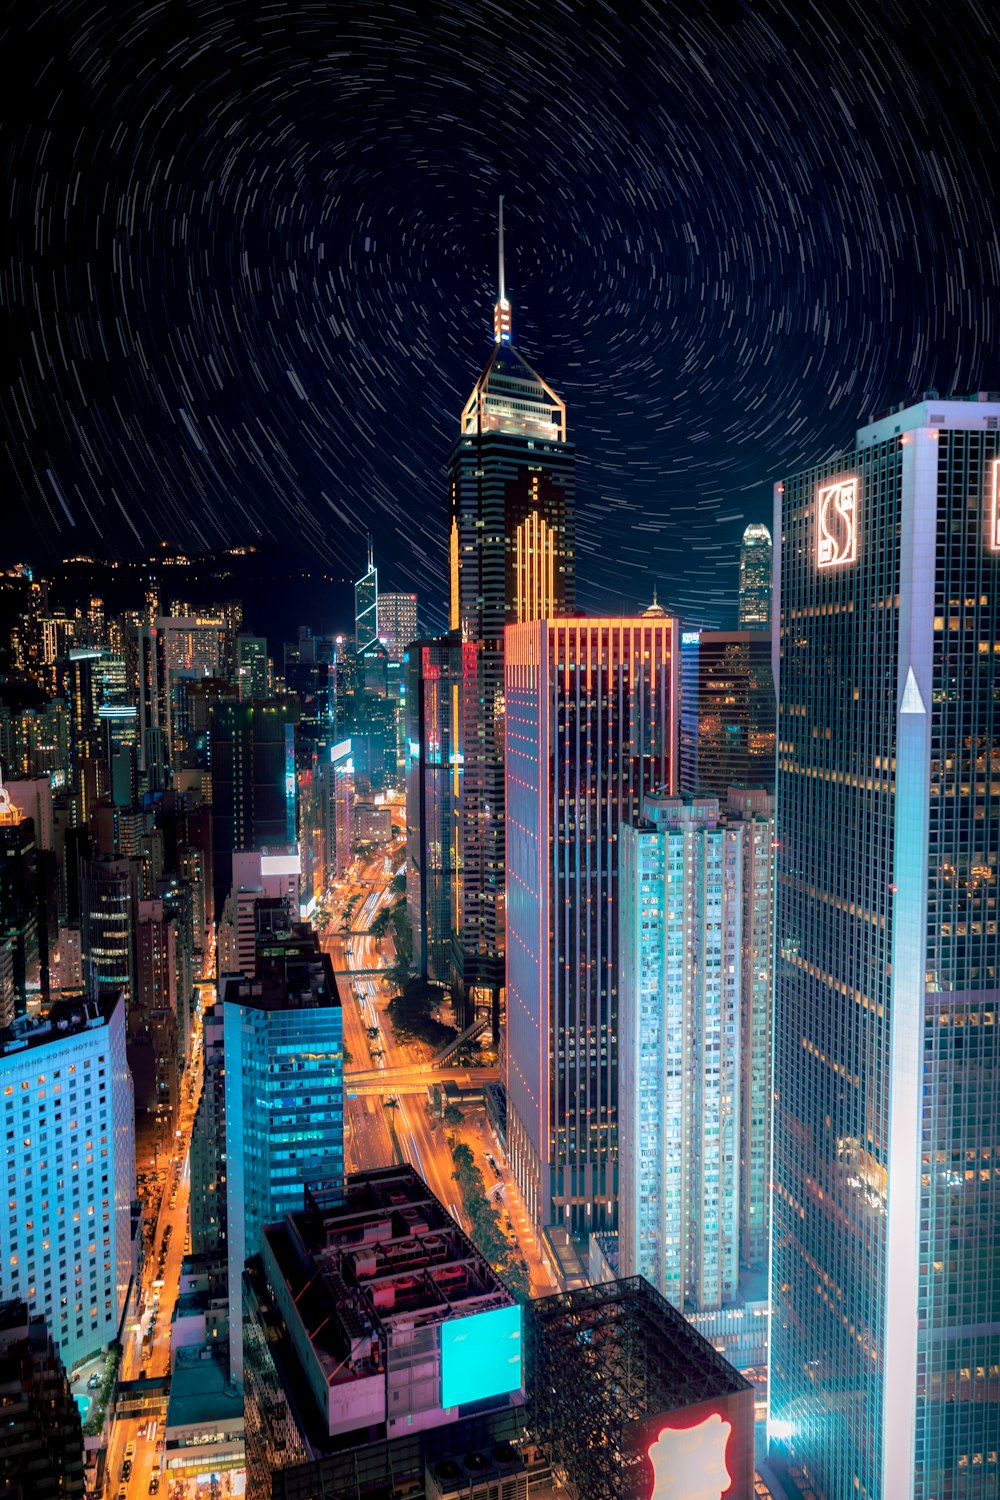 New York City during nighttime